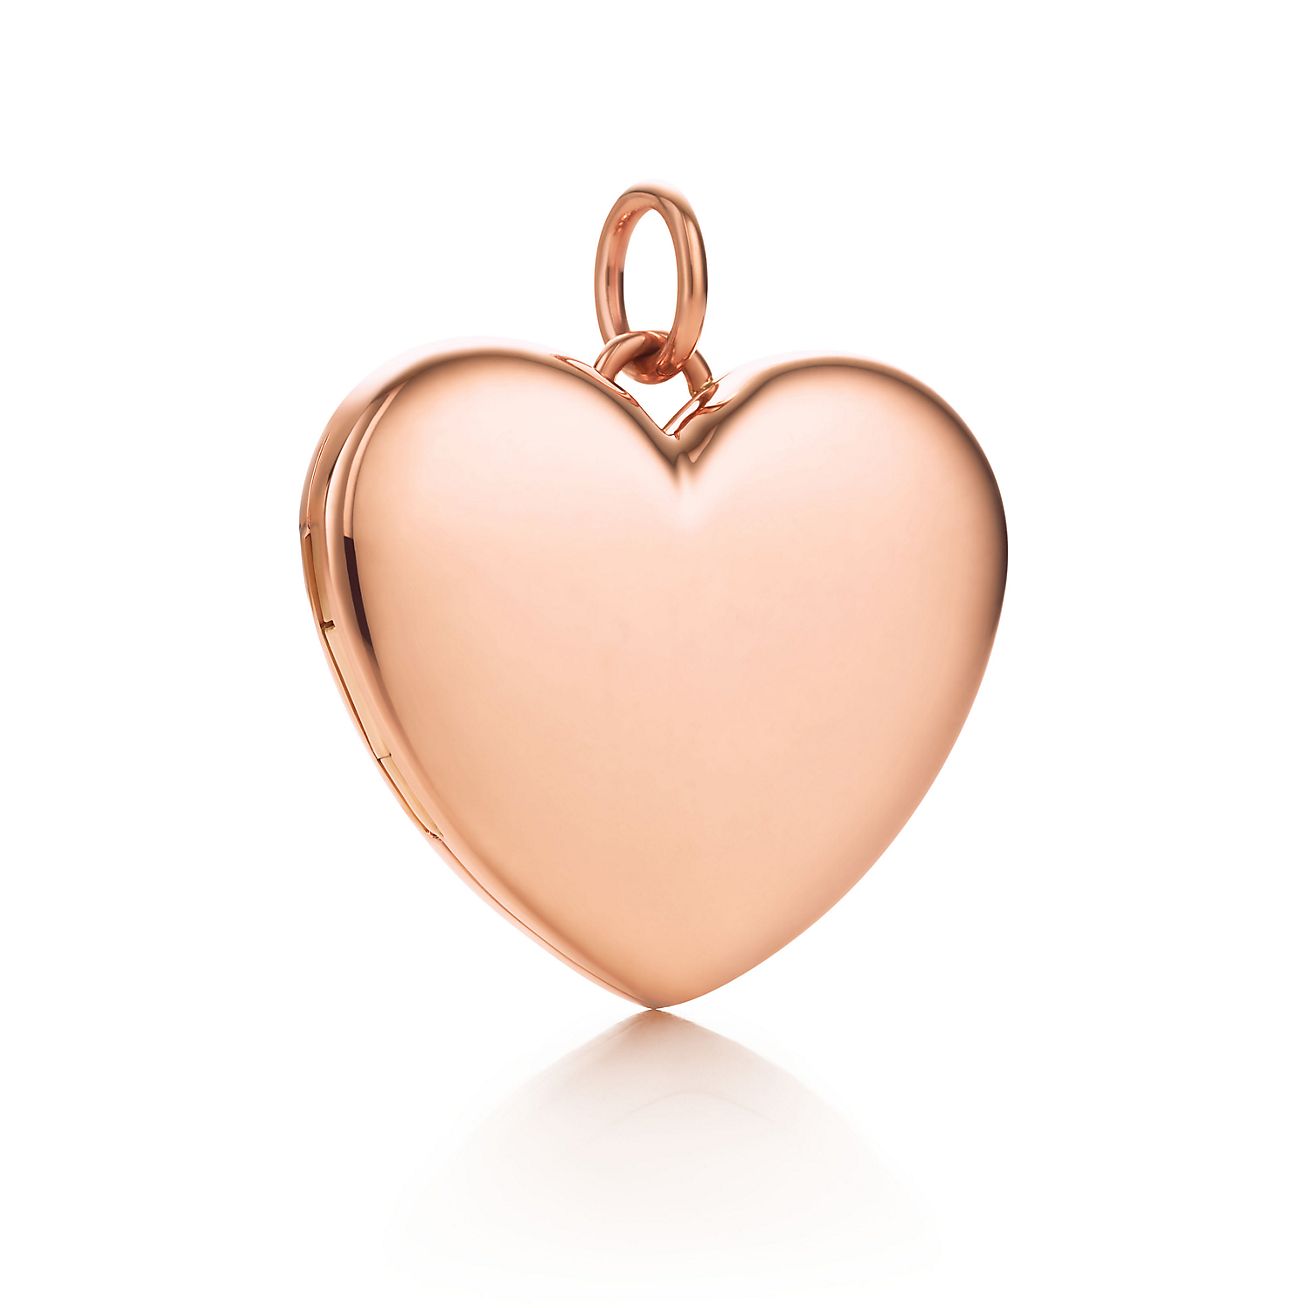 Heart locket in 18k rose gold, large 